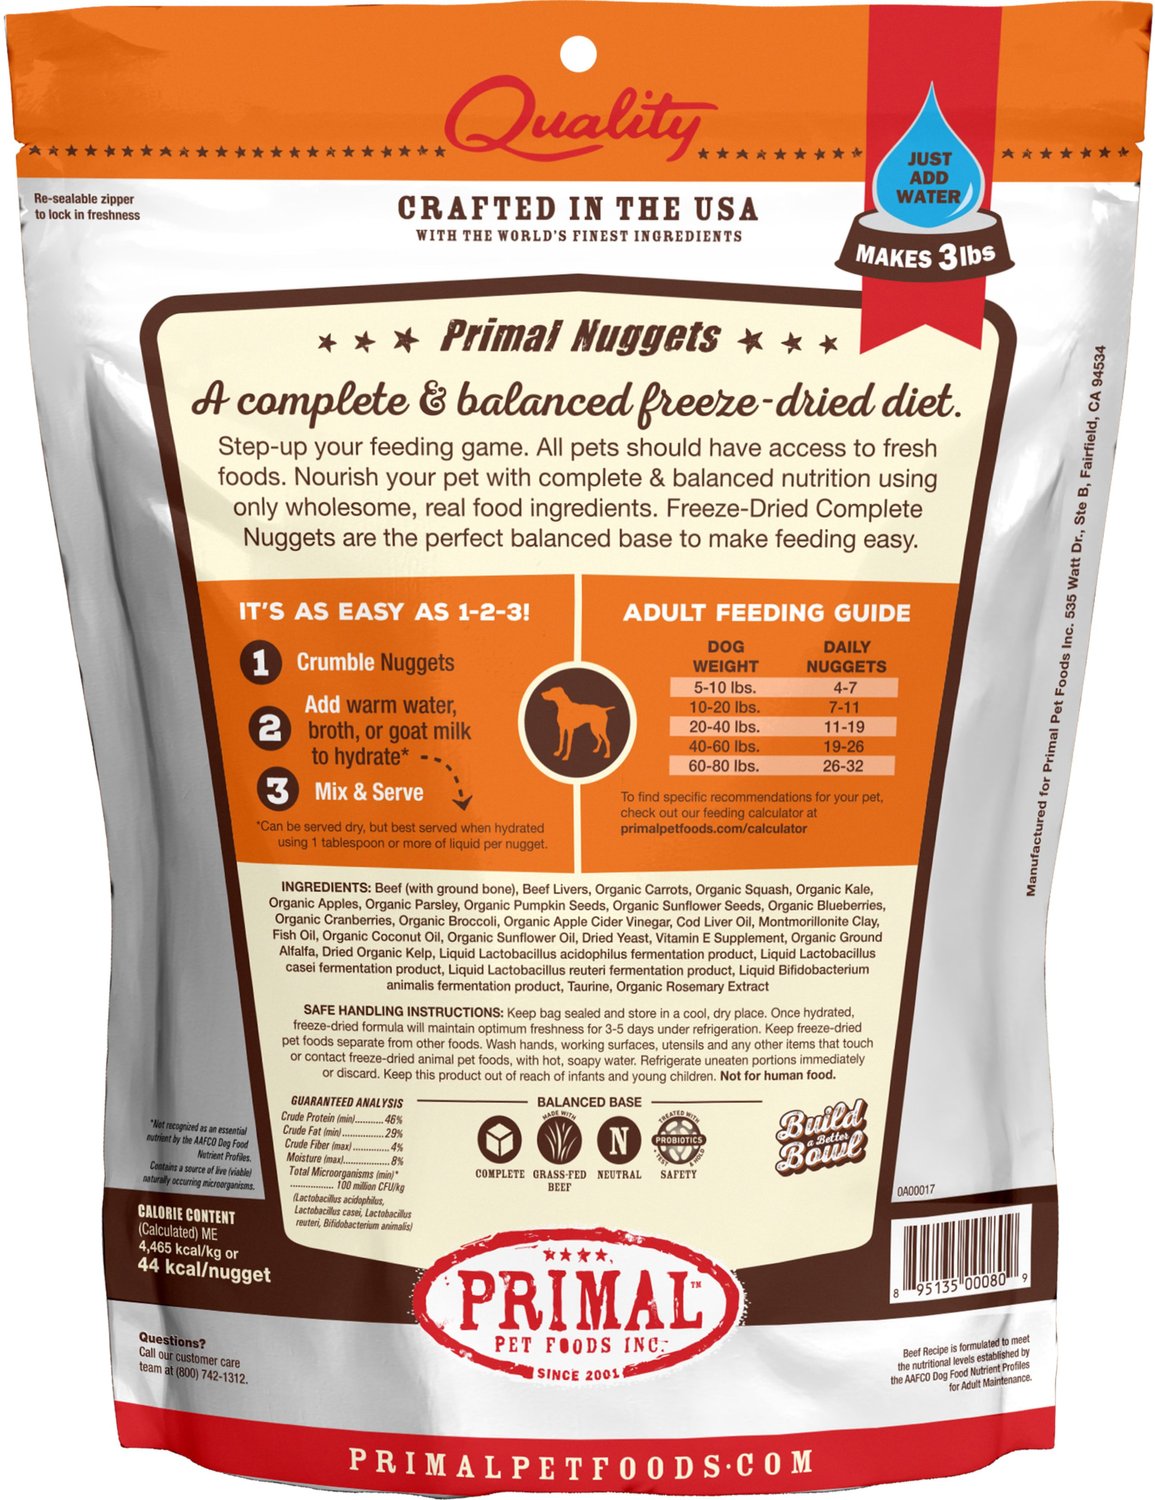 primal brand dog food